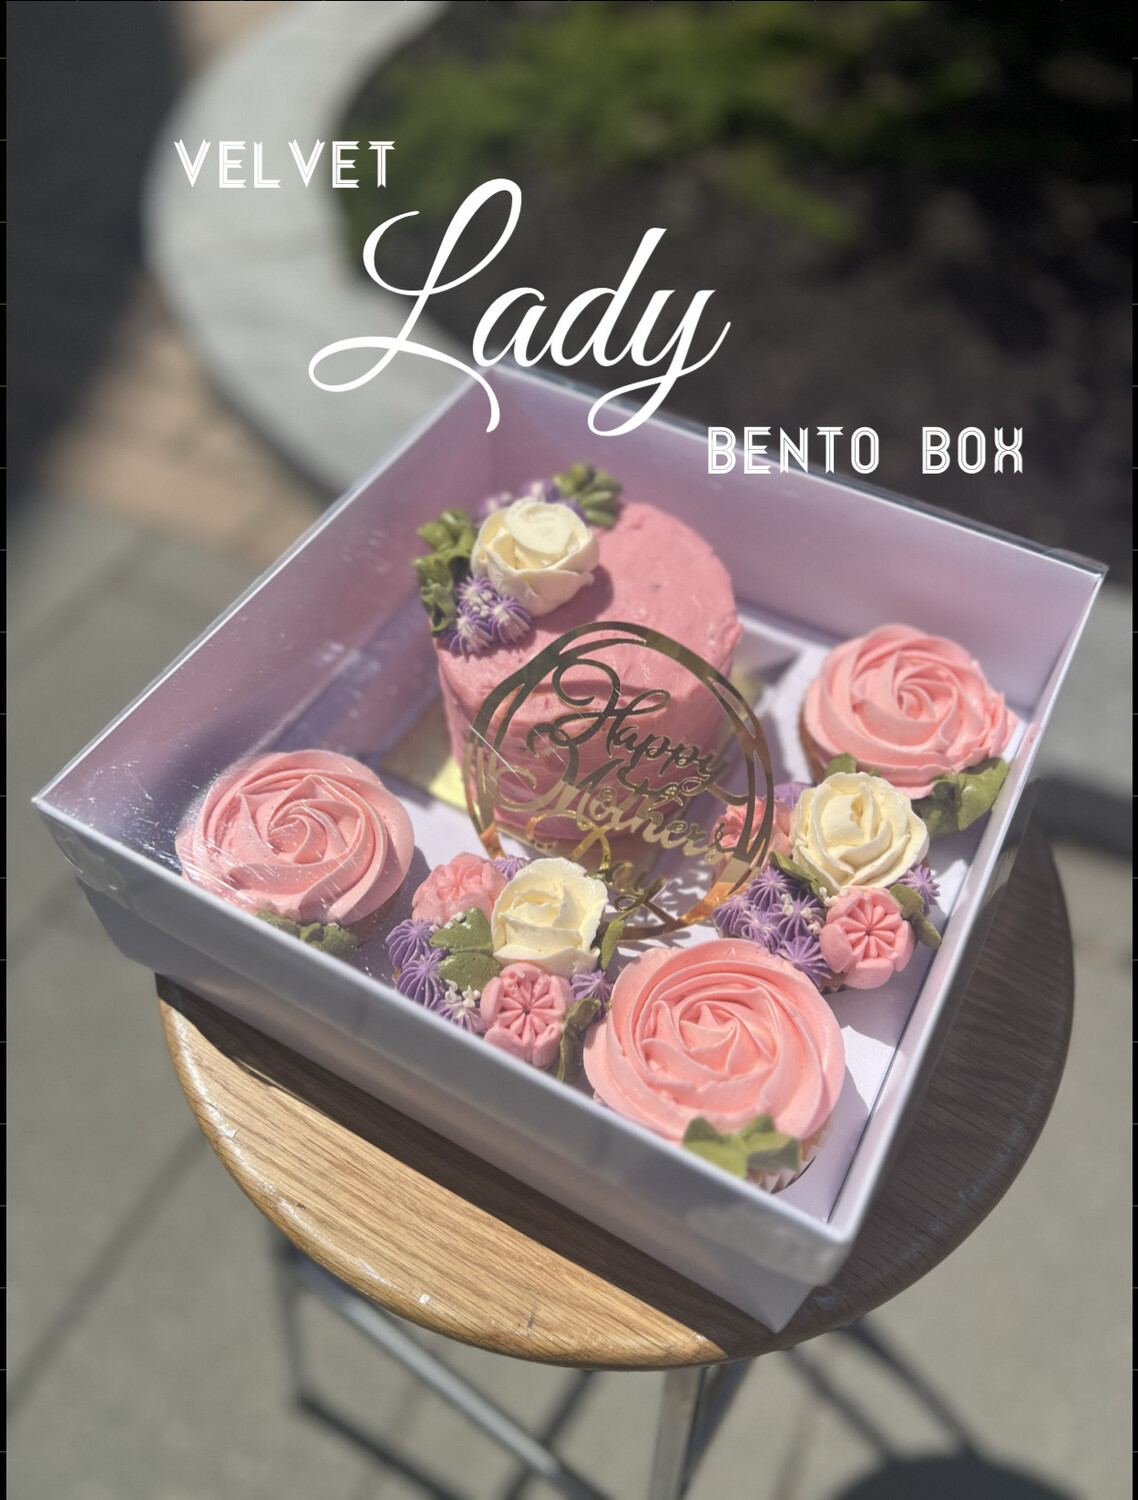 Velvet Lady Bento Box